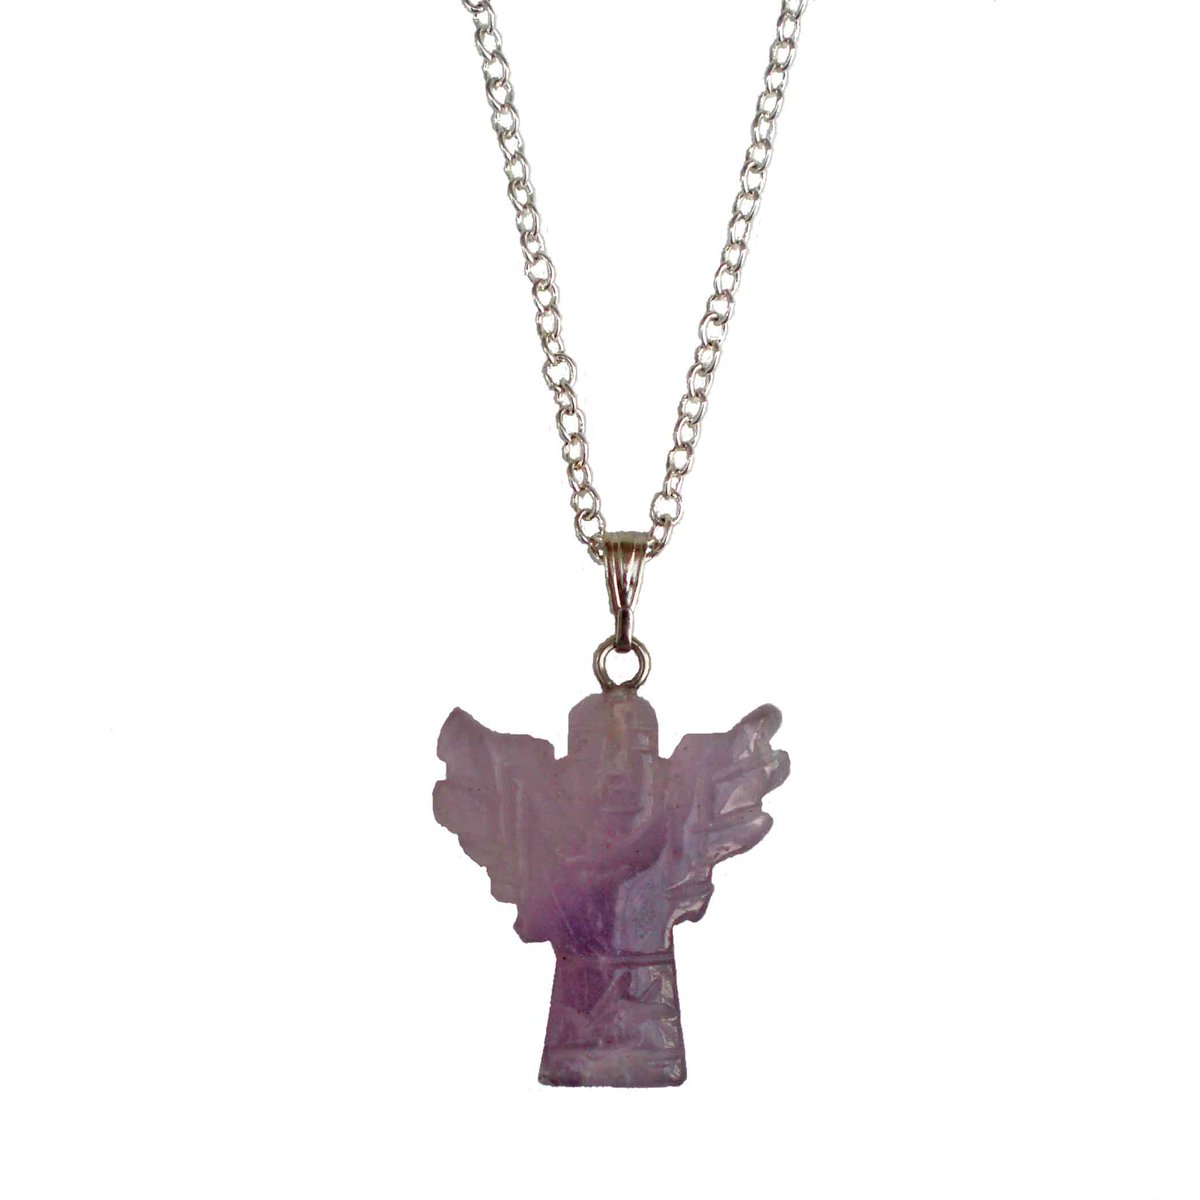 A cute little amethyst angel pendant - a lovely gift for a girl.
etsy.com/uk/listing/586… #amethystpendant #amethystnecklace #gemstones #gemstonejewellery #purplependant #purplenecklace #etsymntt #etsyseller #etsyshop